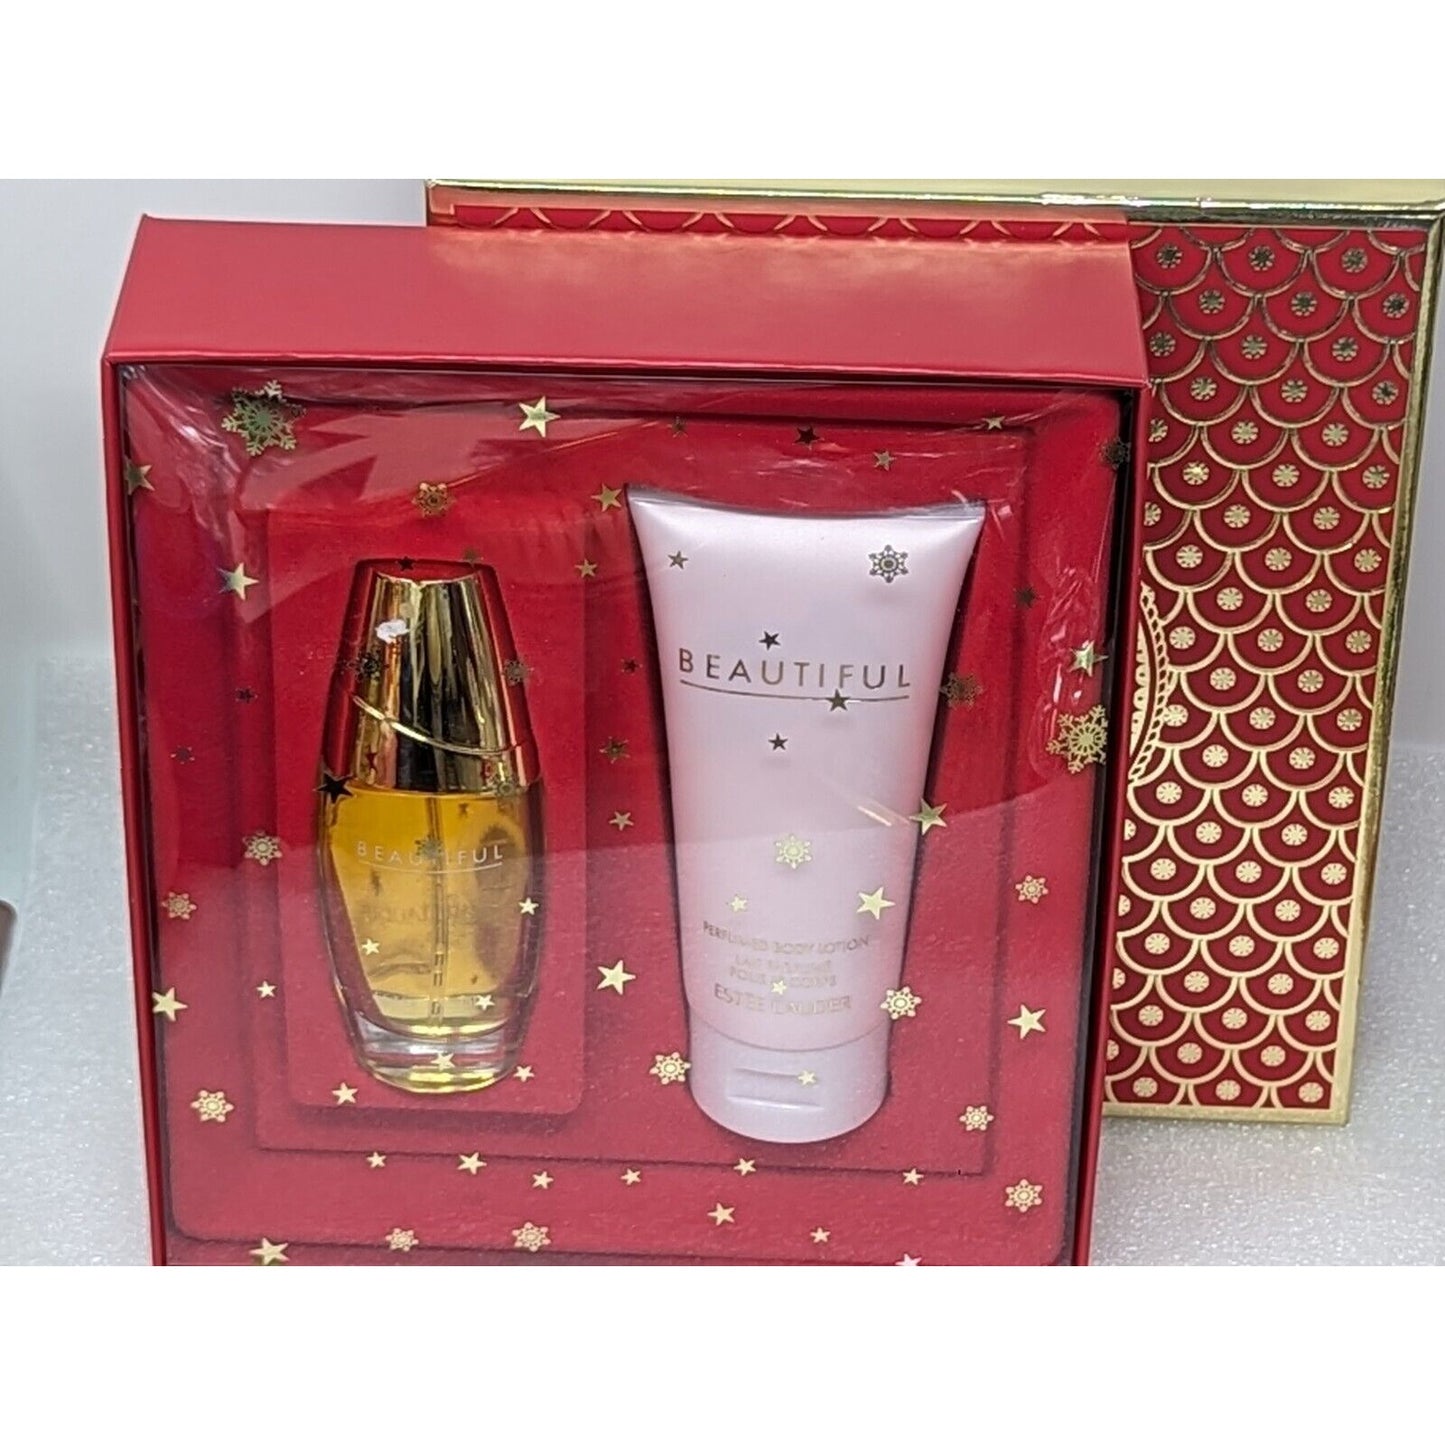 Estee Lauder Beautiful Favorites Gift Set Perfume & Body Lotion